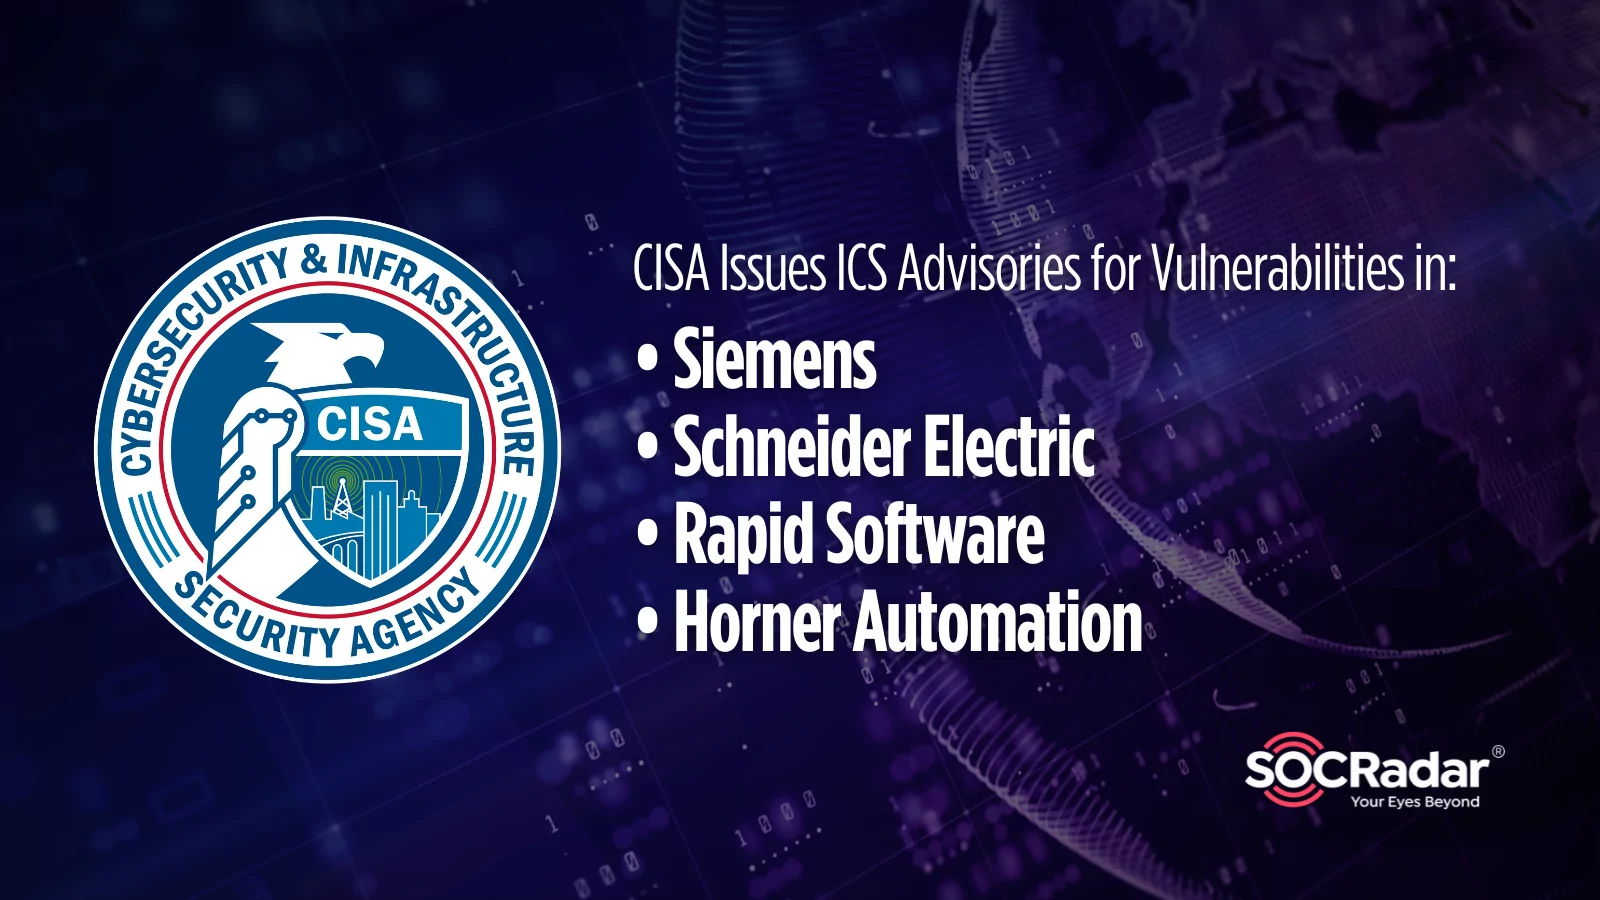 SOCRadar® Cyber Intelligence Inc. | CISA Issues ICS Advisories for Vulnerabilities Affecting Siemens, Schneider Electric, Rapid Software, Horner Automation